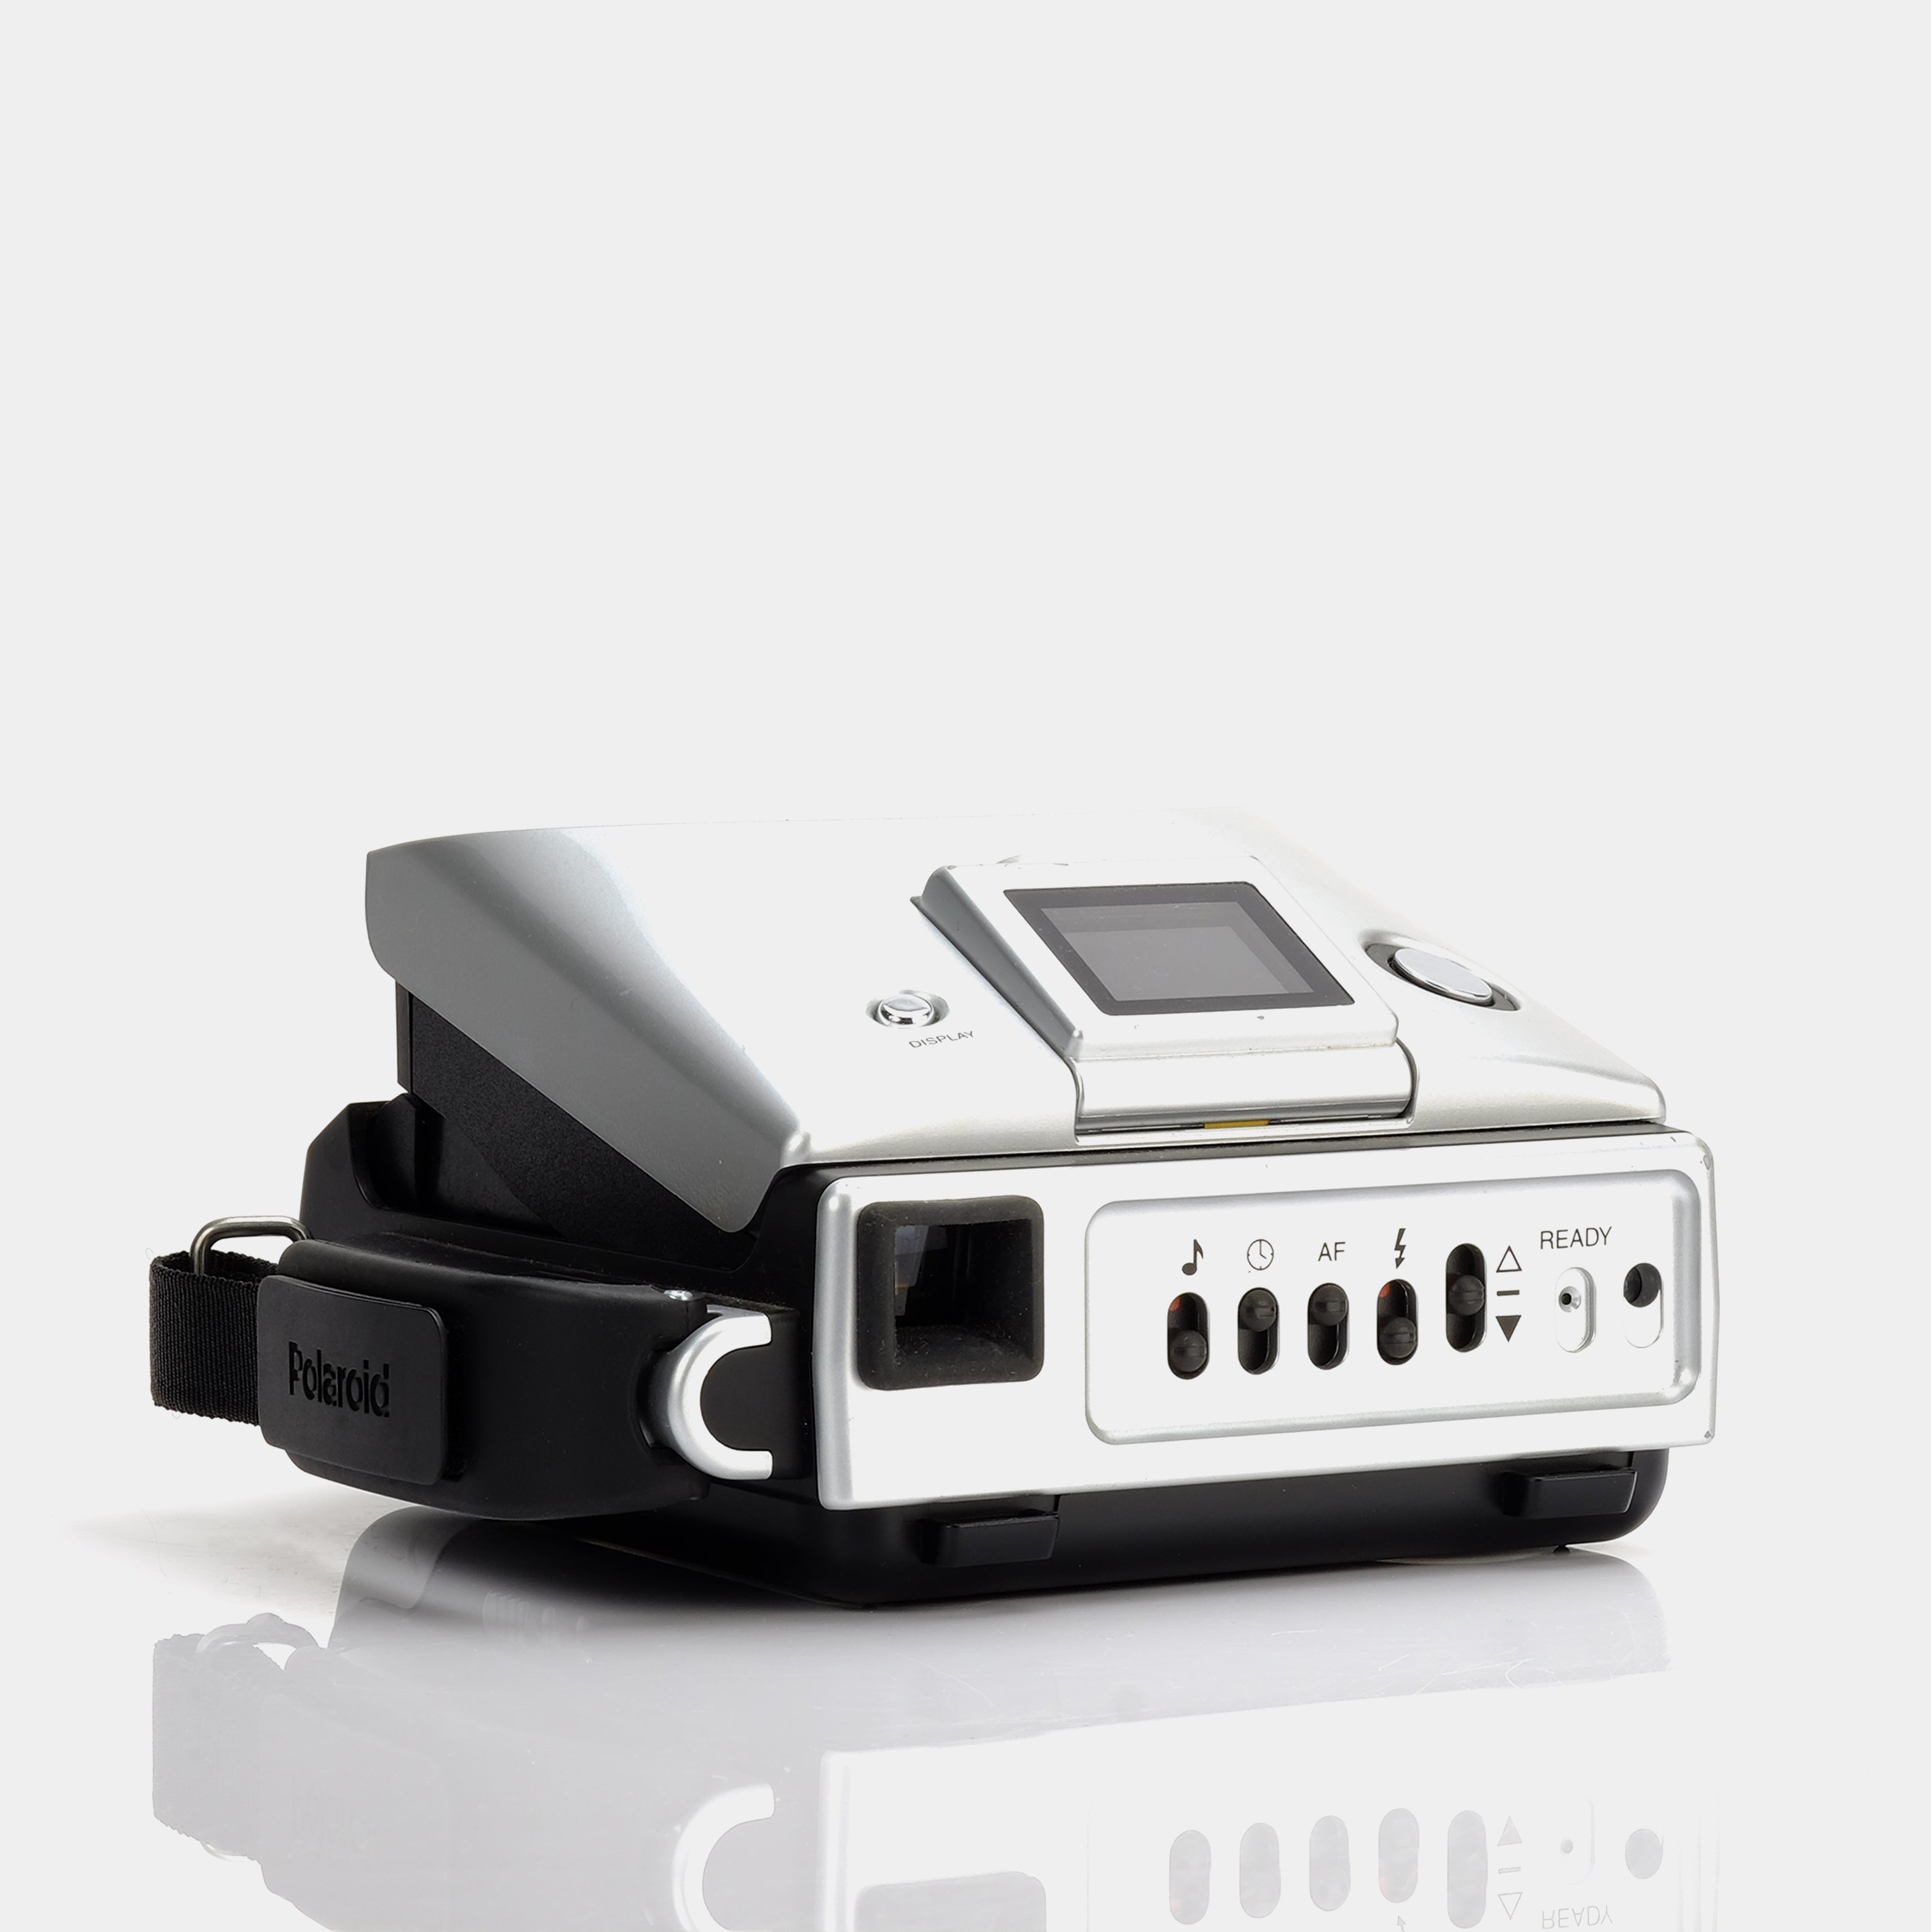 Polaroid Spectra Image 1200 Instant Film Camera - New in Box